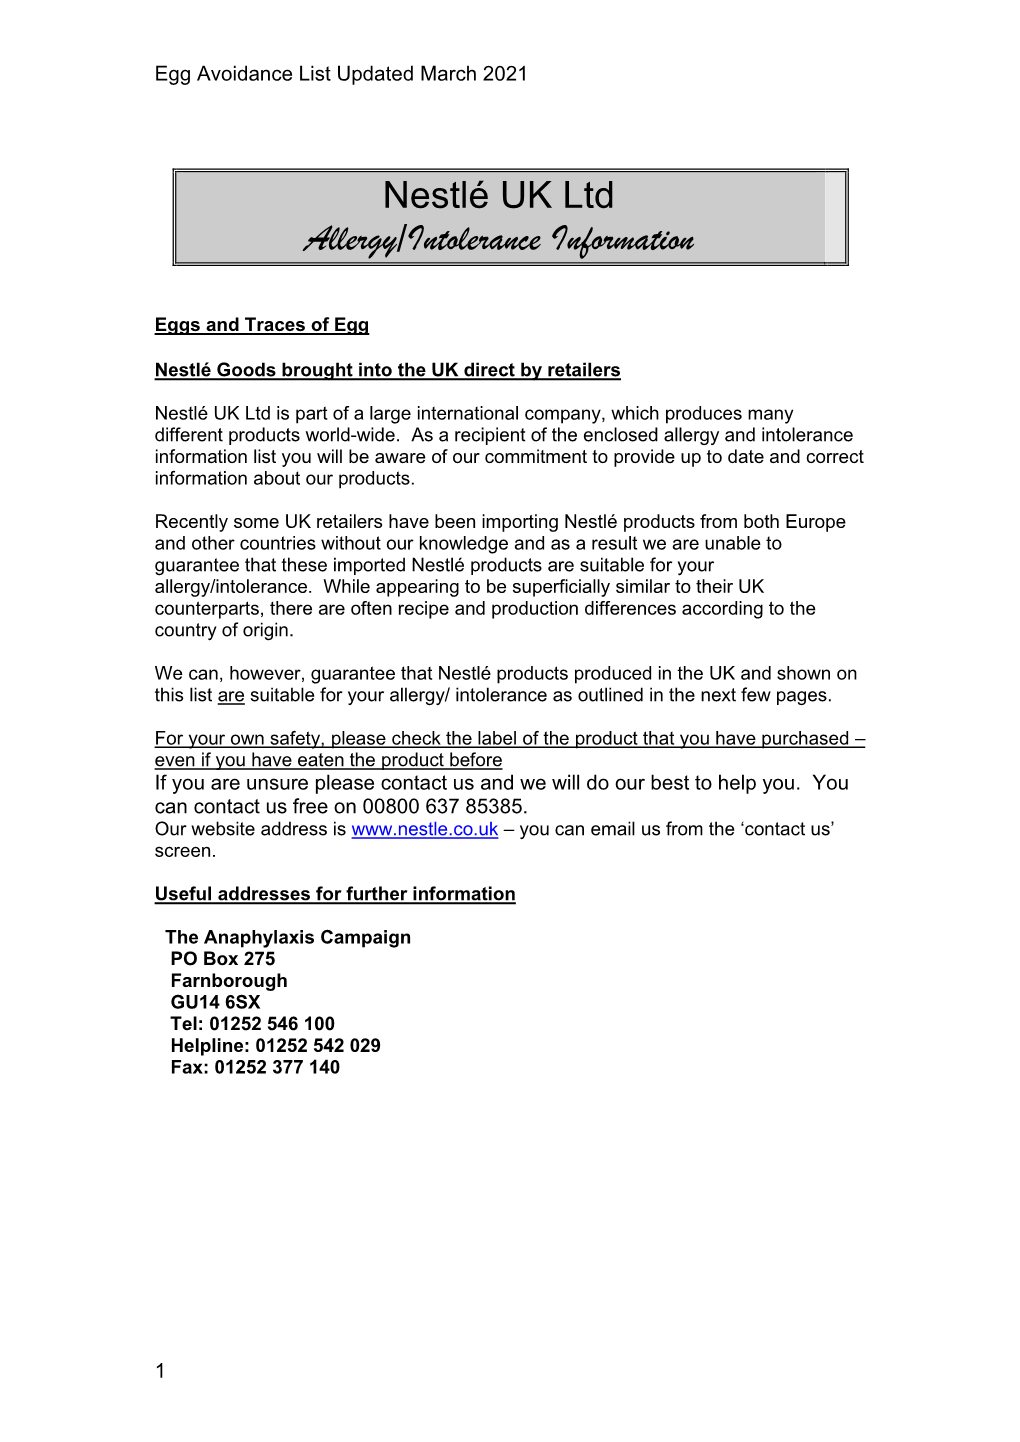 Nestlé UK Ltd Allergy/Intolerance Information